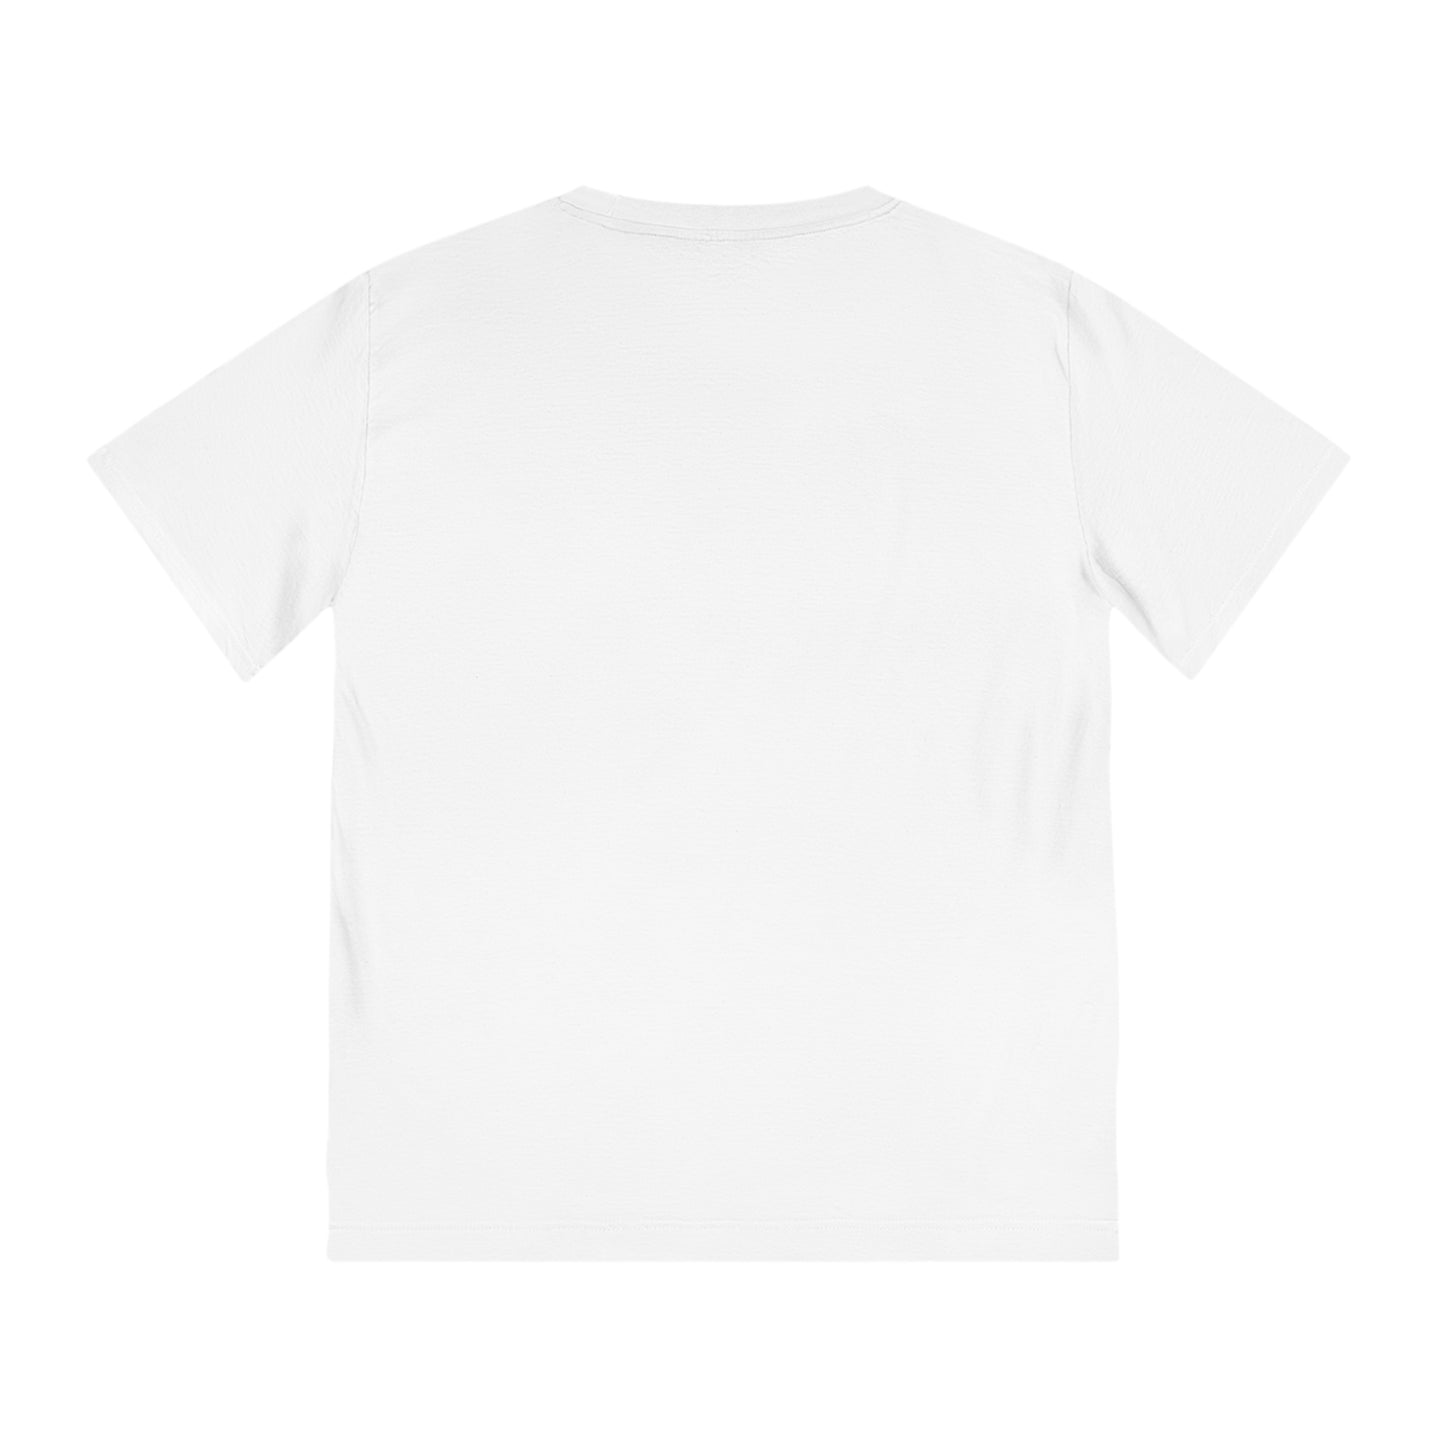 TROPICAL FUTURE 101 - Unisex Rocker T-Shirt